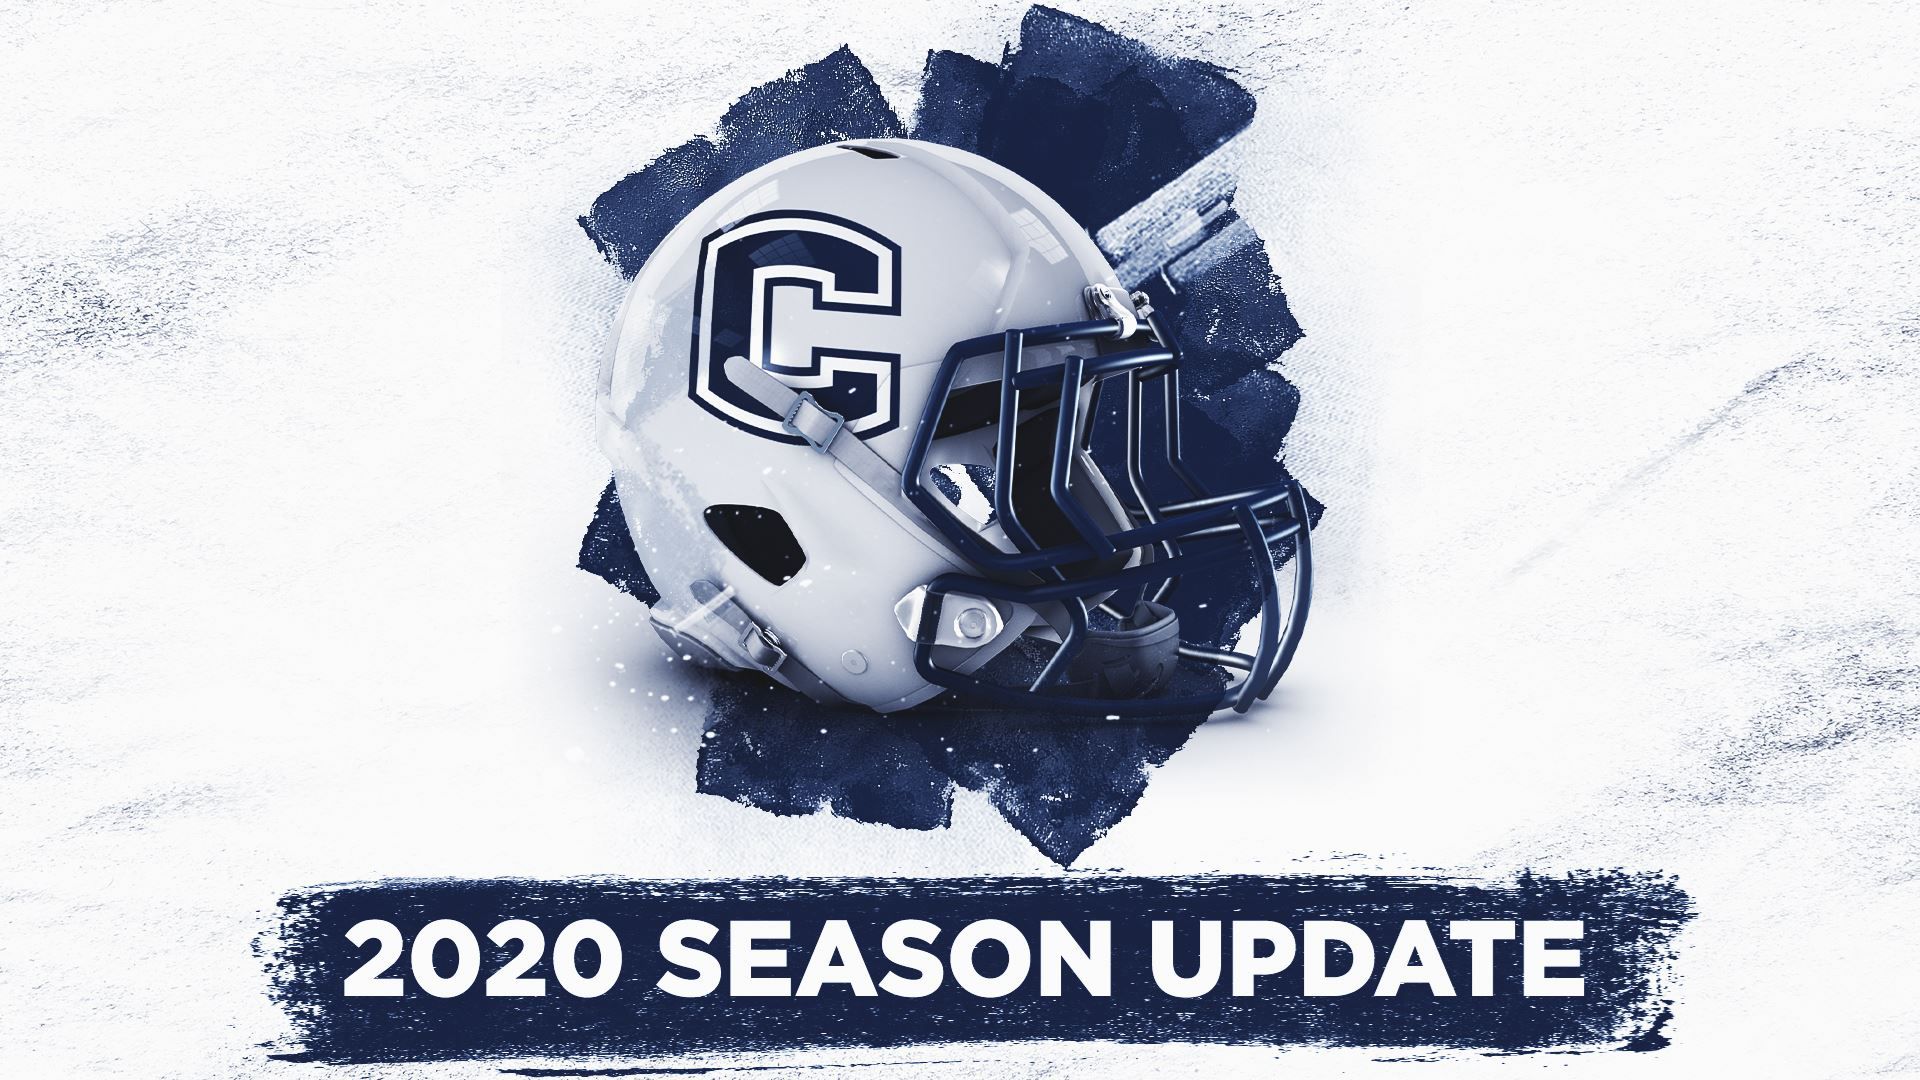 UConn cancels 2020 college football season amid COVID-19 concerns